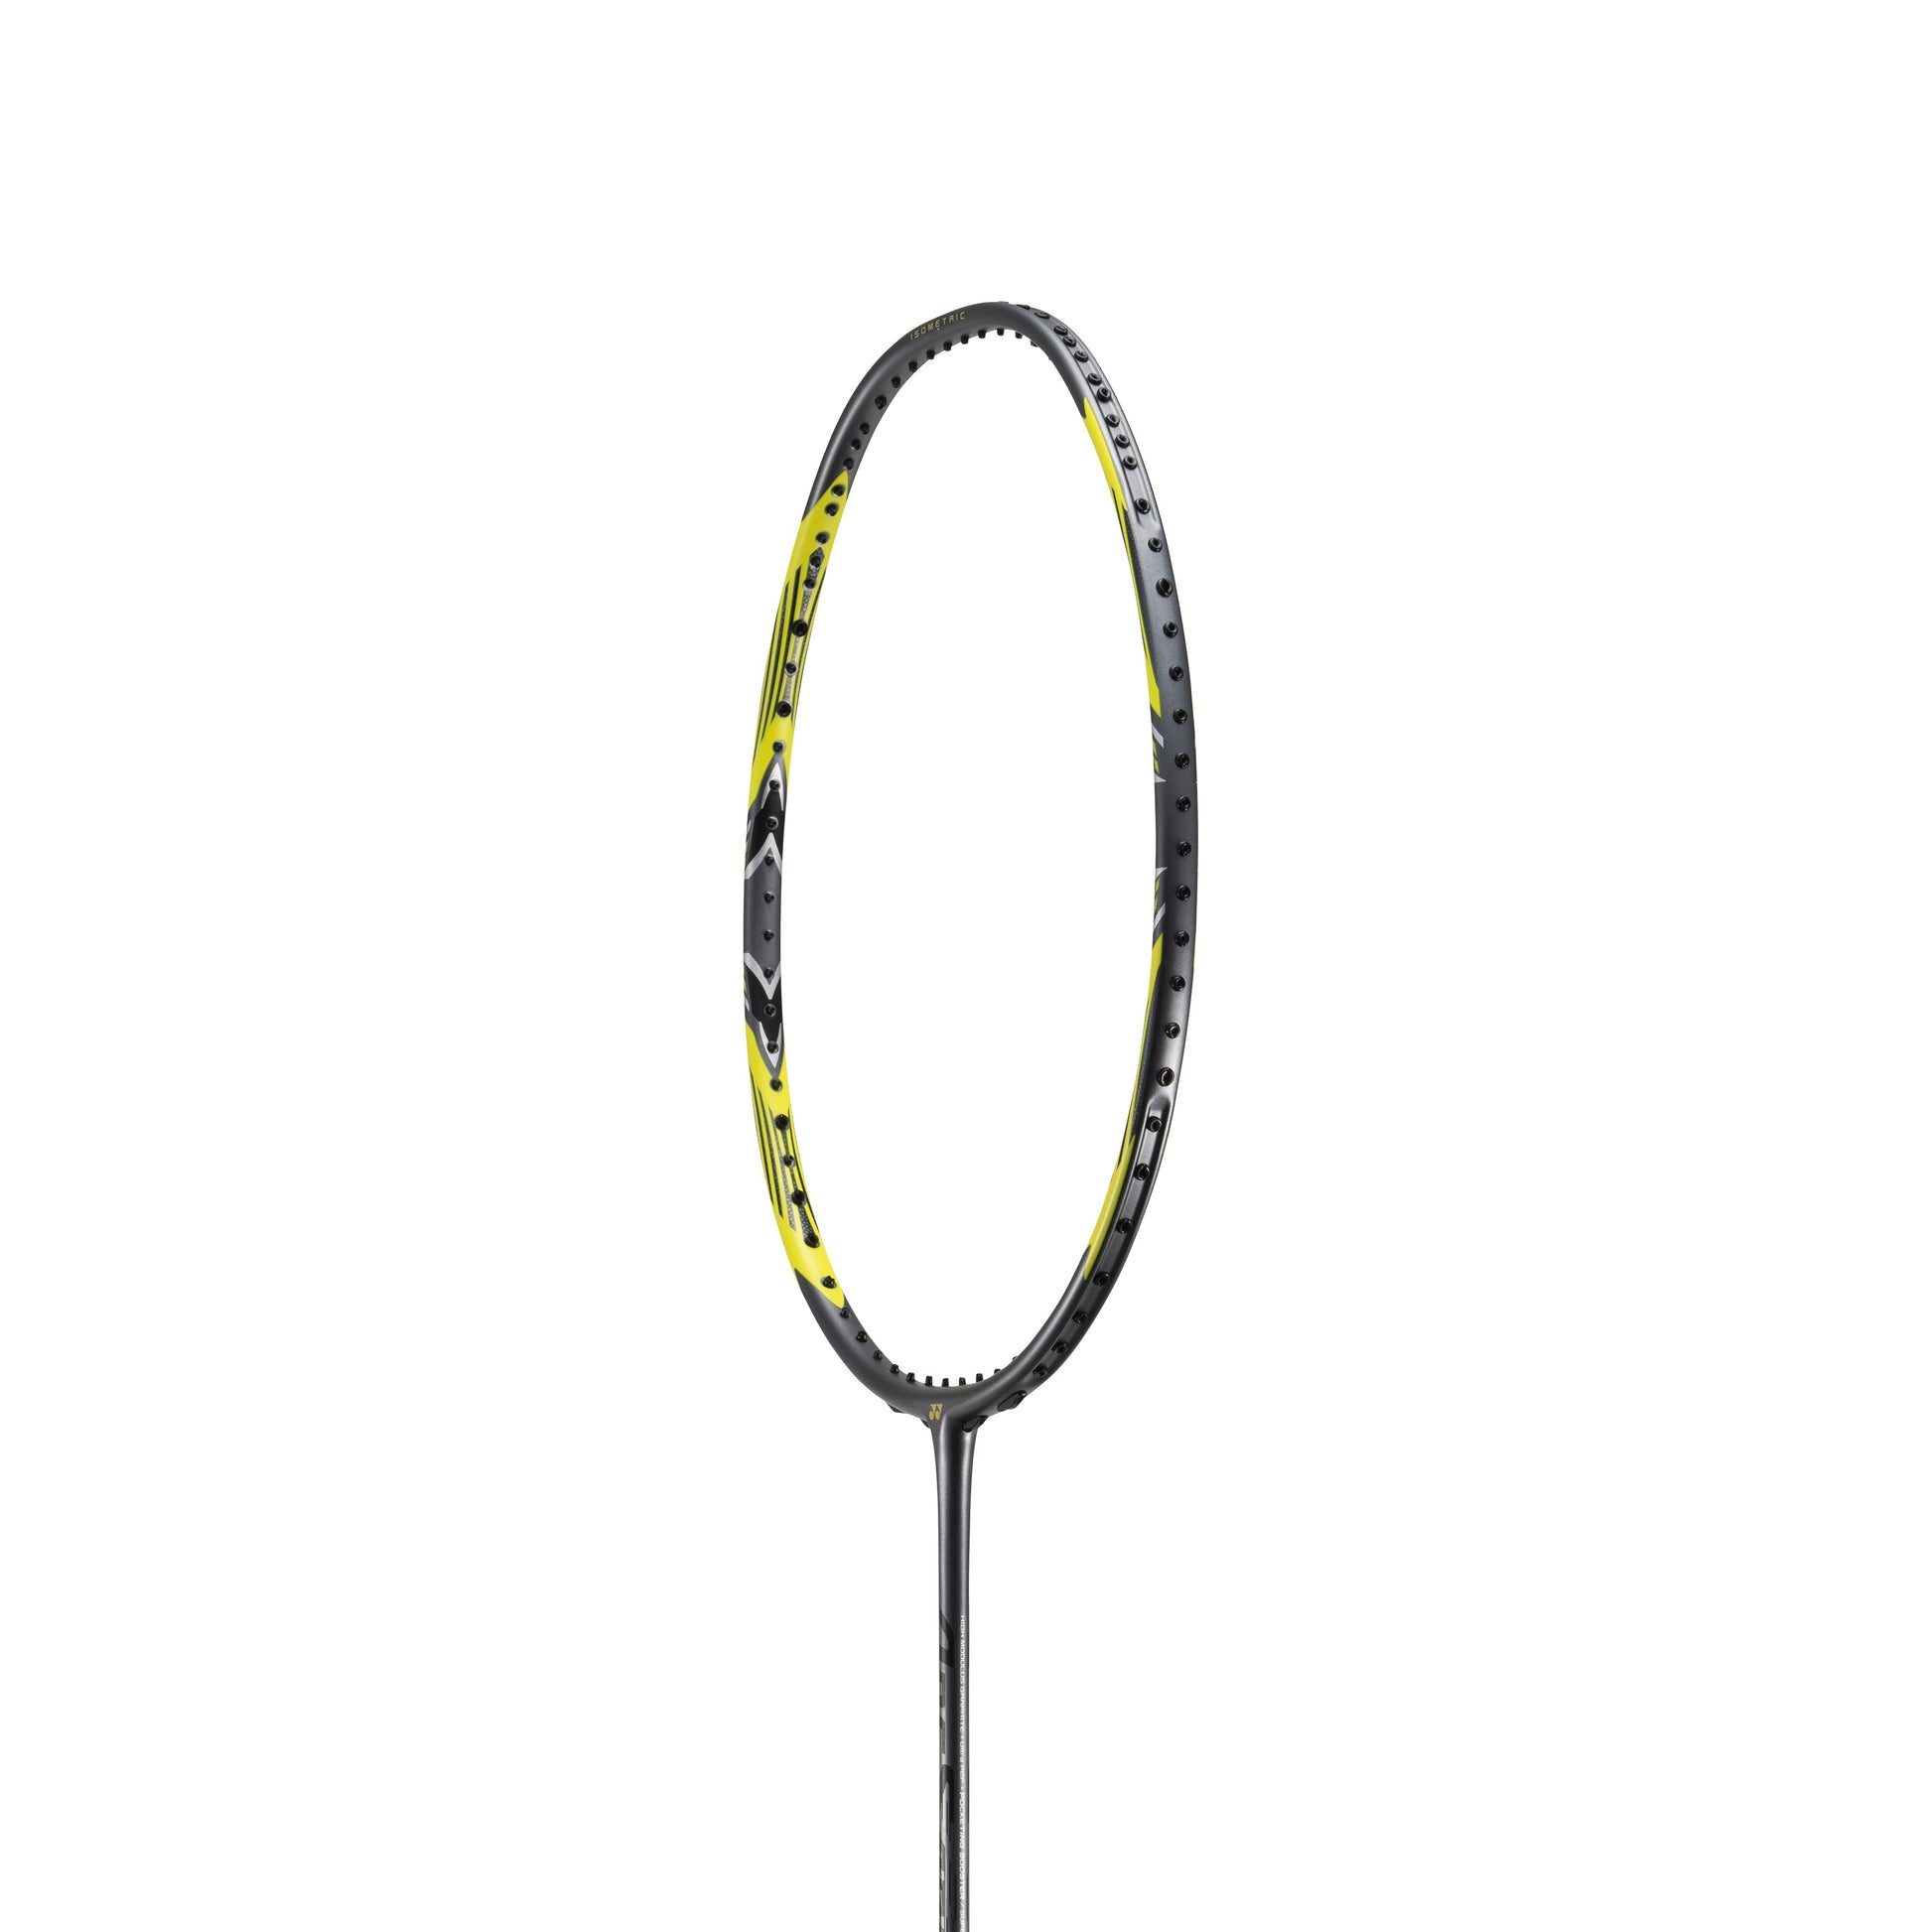 Yonex Arcsaber 7 Pro Badminton Racquet, Grey/Yellow (4UG5) - Best Price online Prokicksports.com